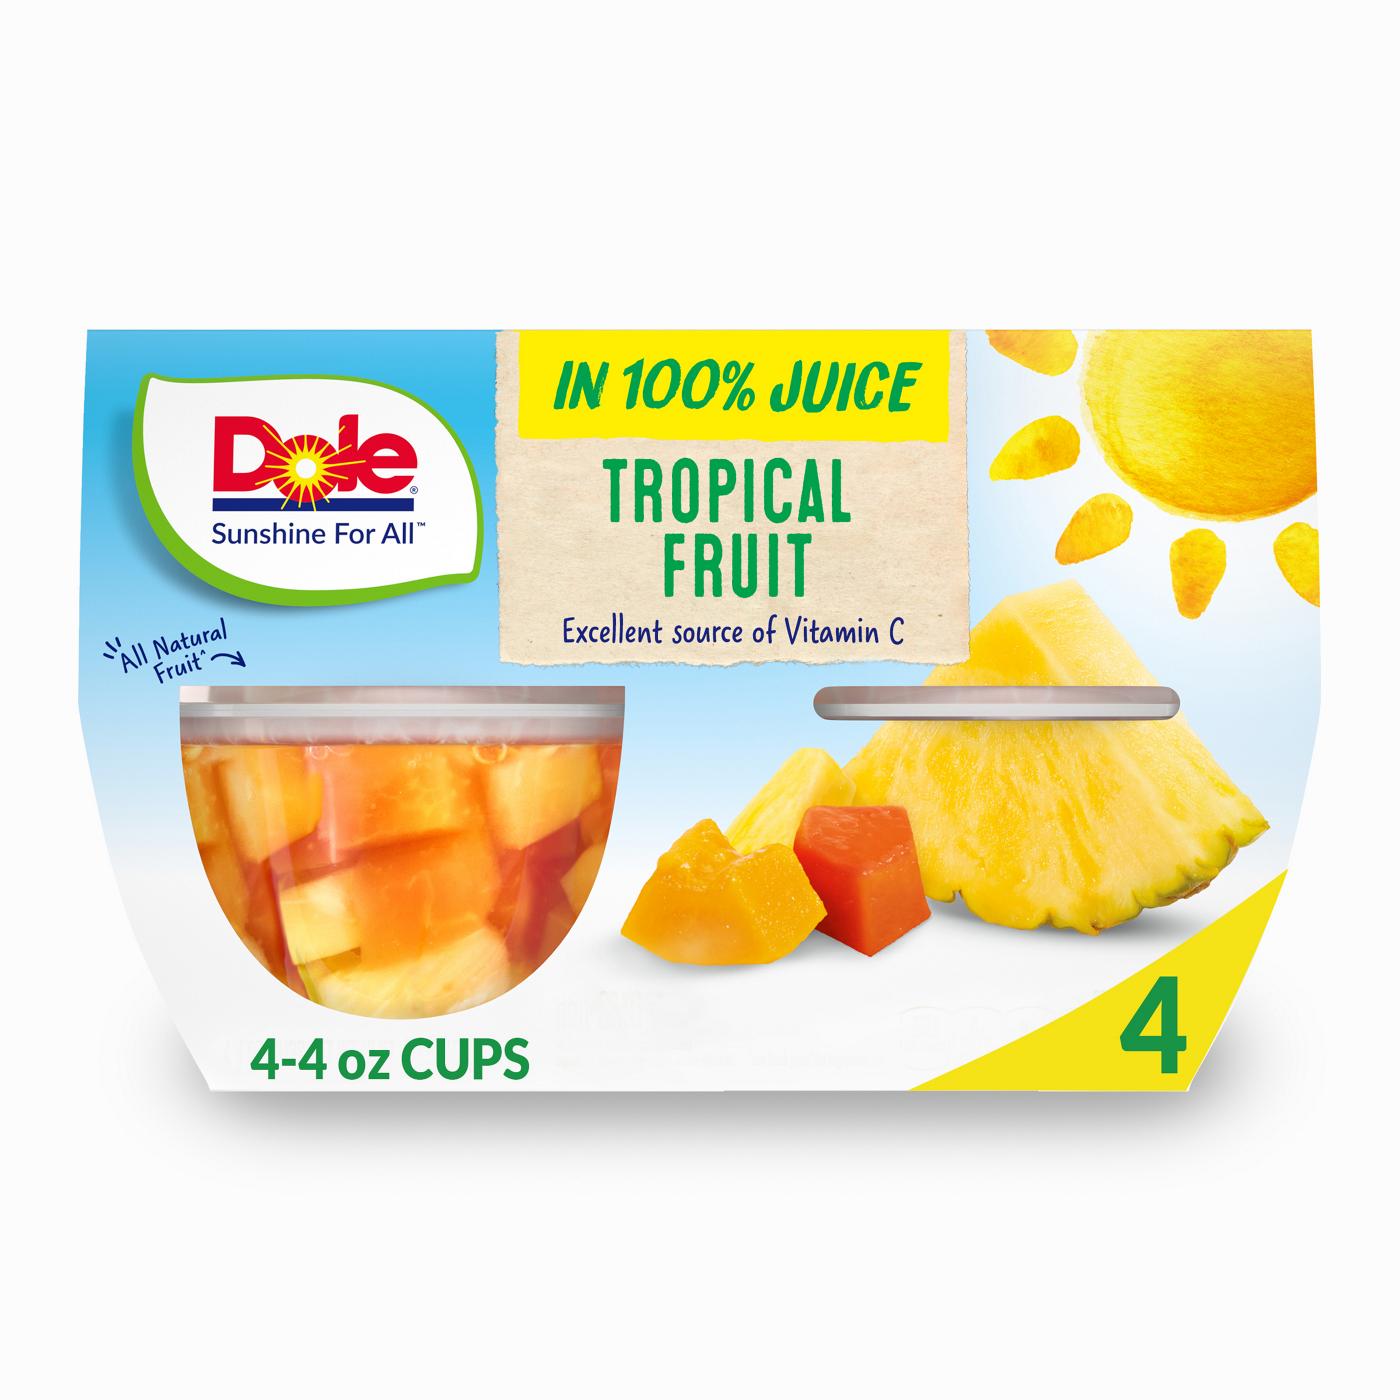 Dole Fruit Bowls - Tropical Fruit in 100% Juice; image 1 of 7